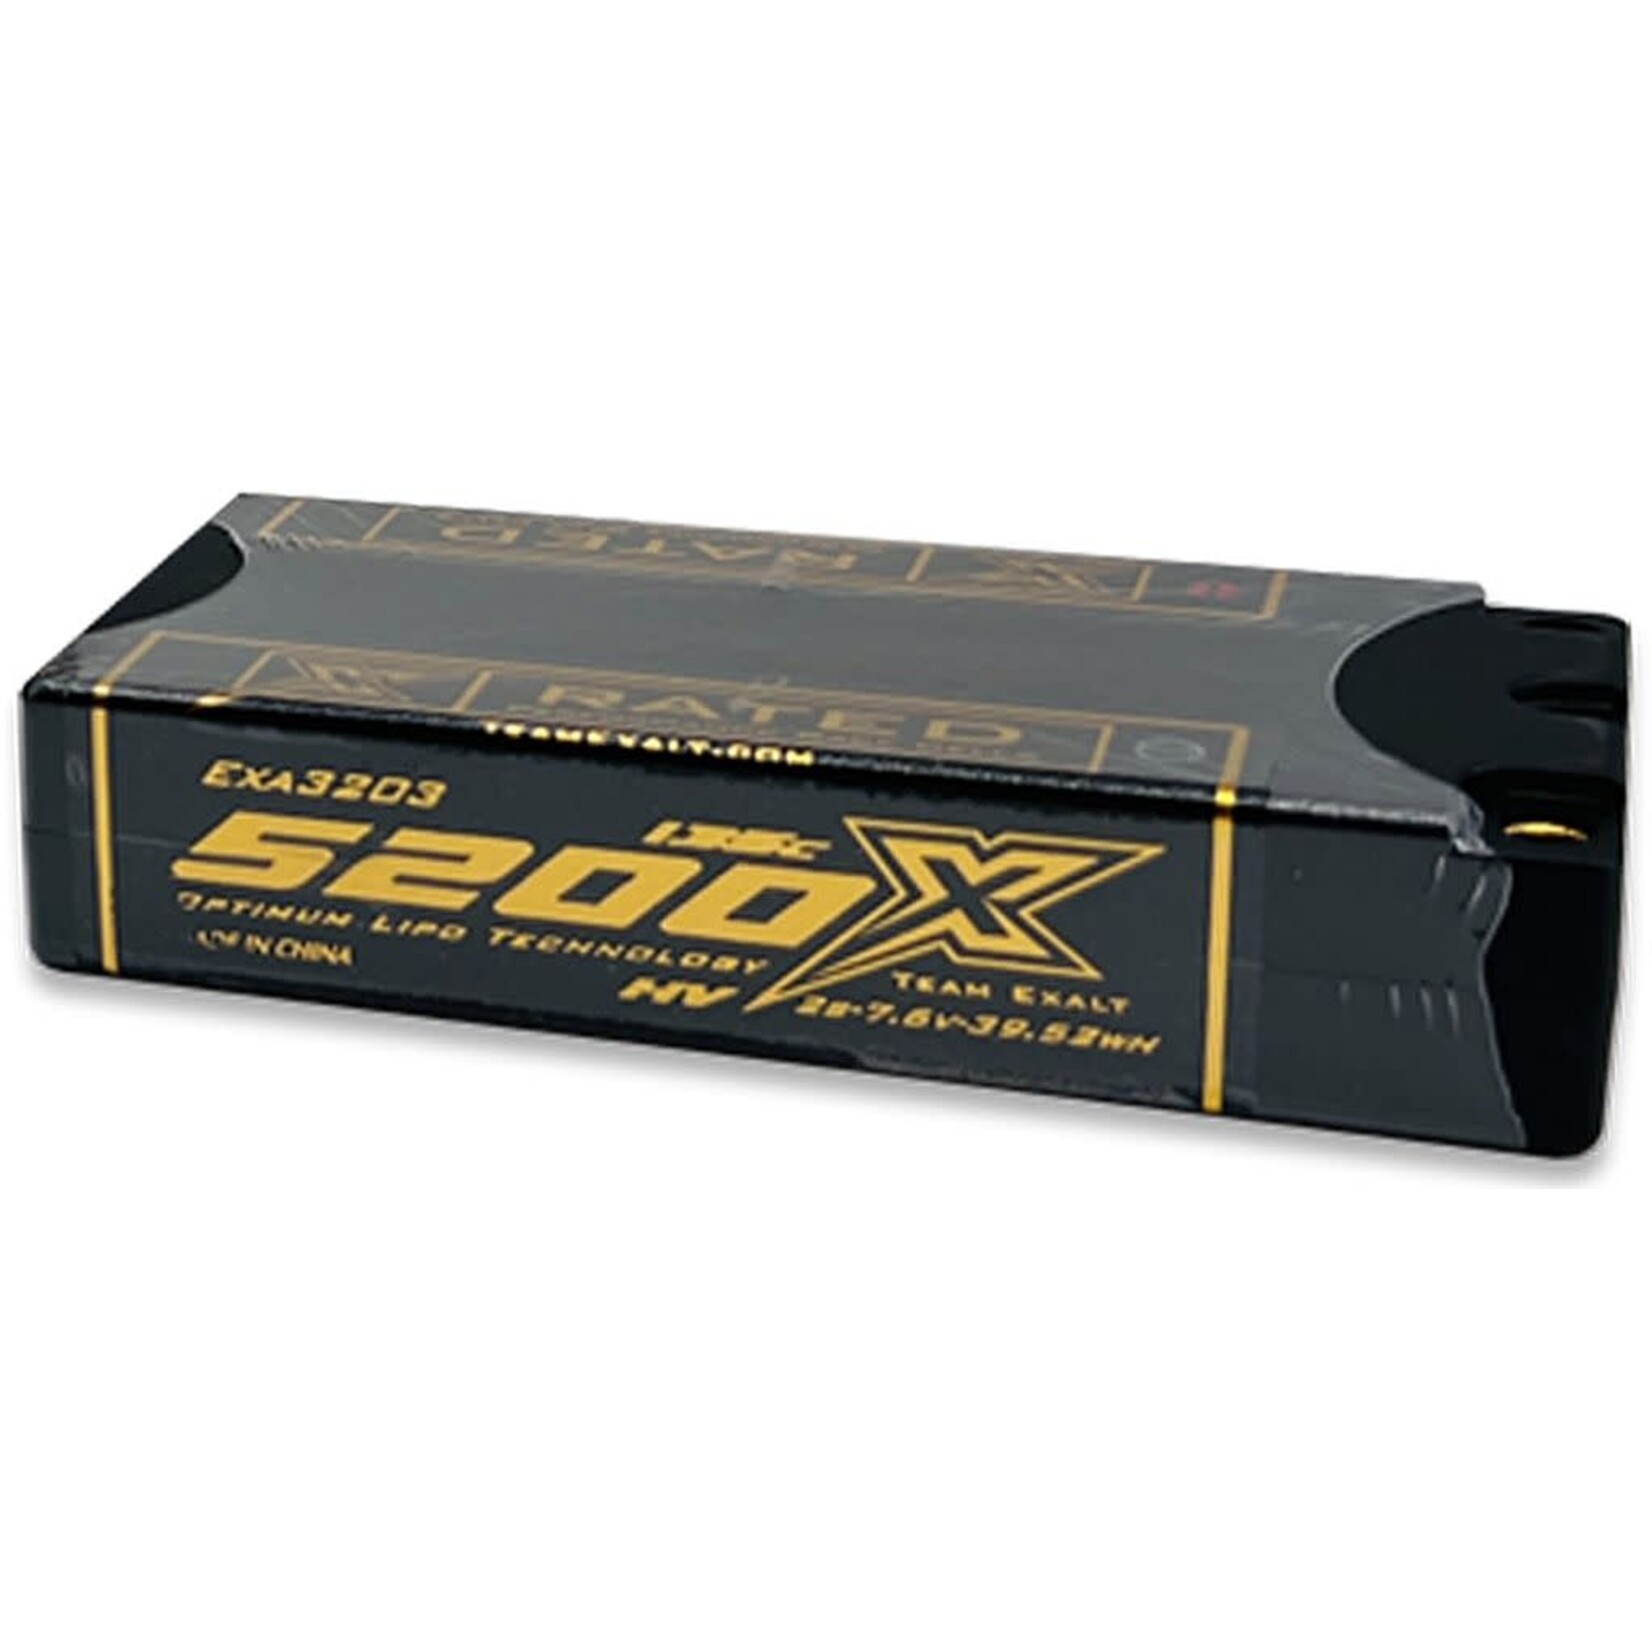 Exalt Exalt X-Rated 2S 135C LCG Hardcase Shorty LiPo Battery (7.6V/5200mAh) w/5mm Bullets #EXA3203